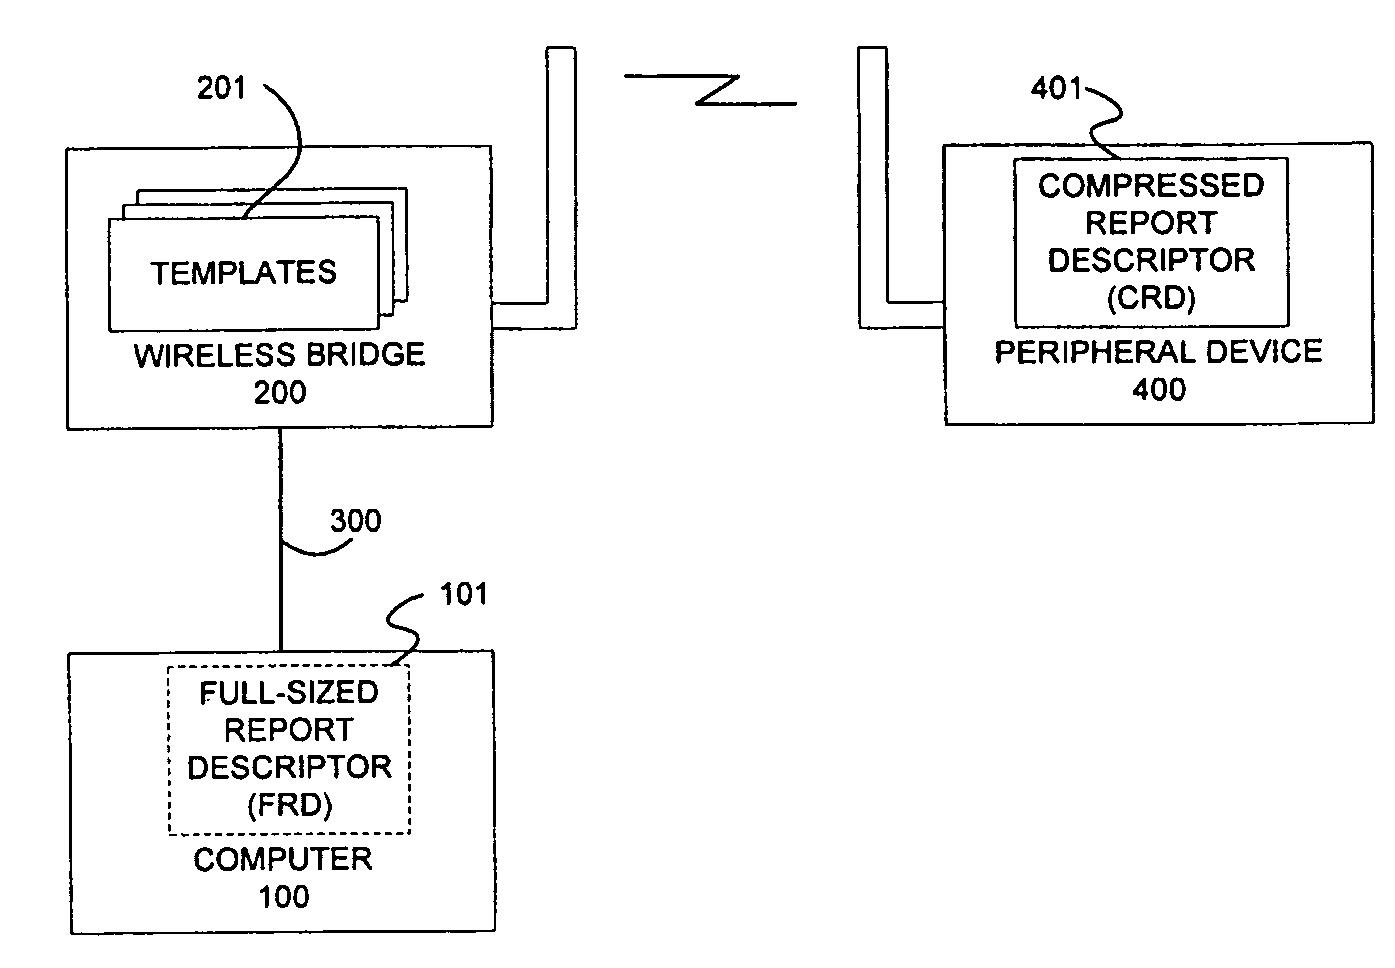 Compressed report descriptors for USB devices